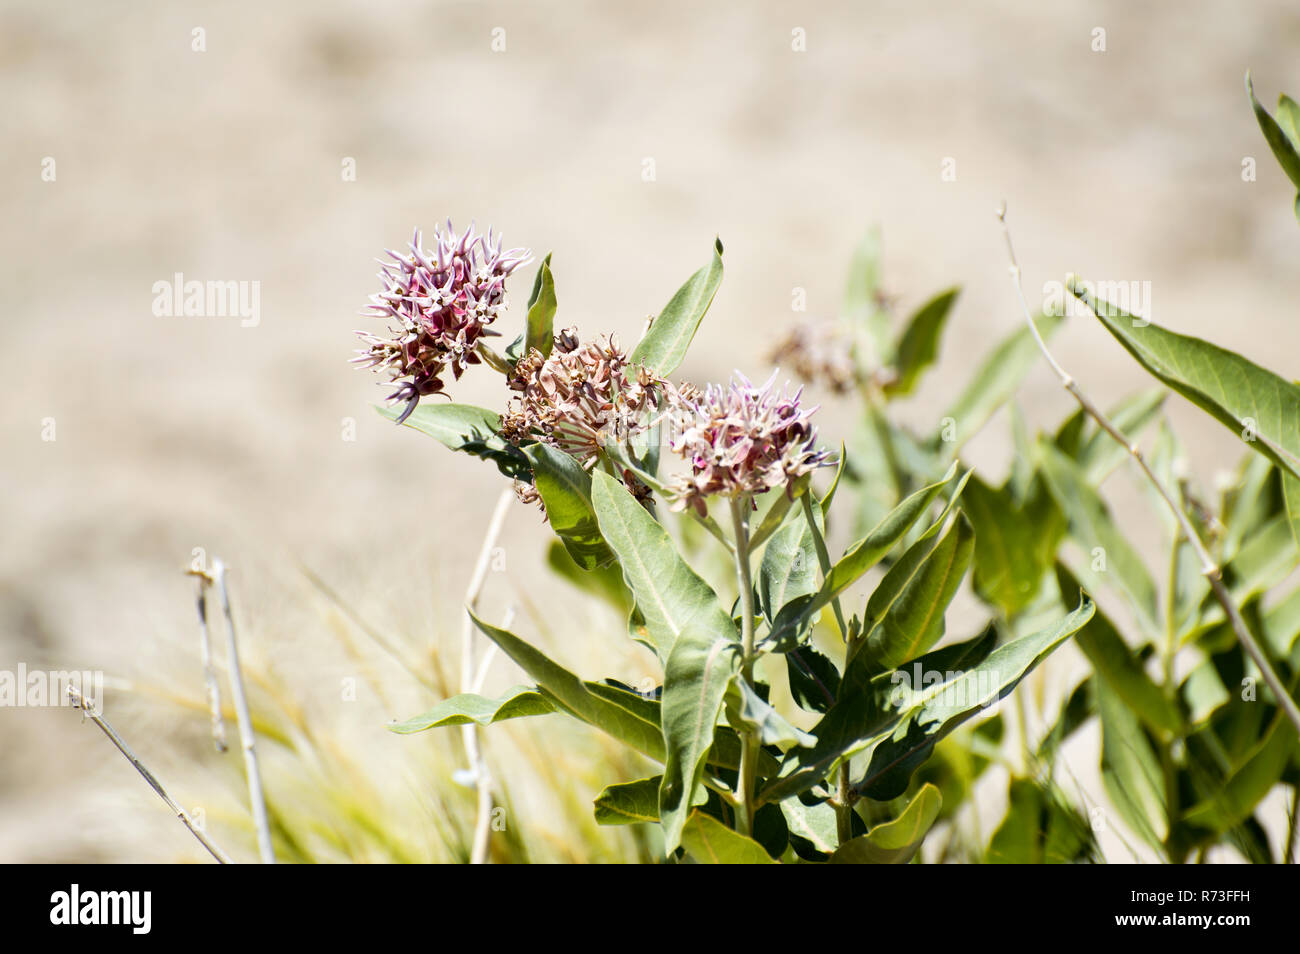 A plant of milkweed in Utah. Stock Photo